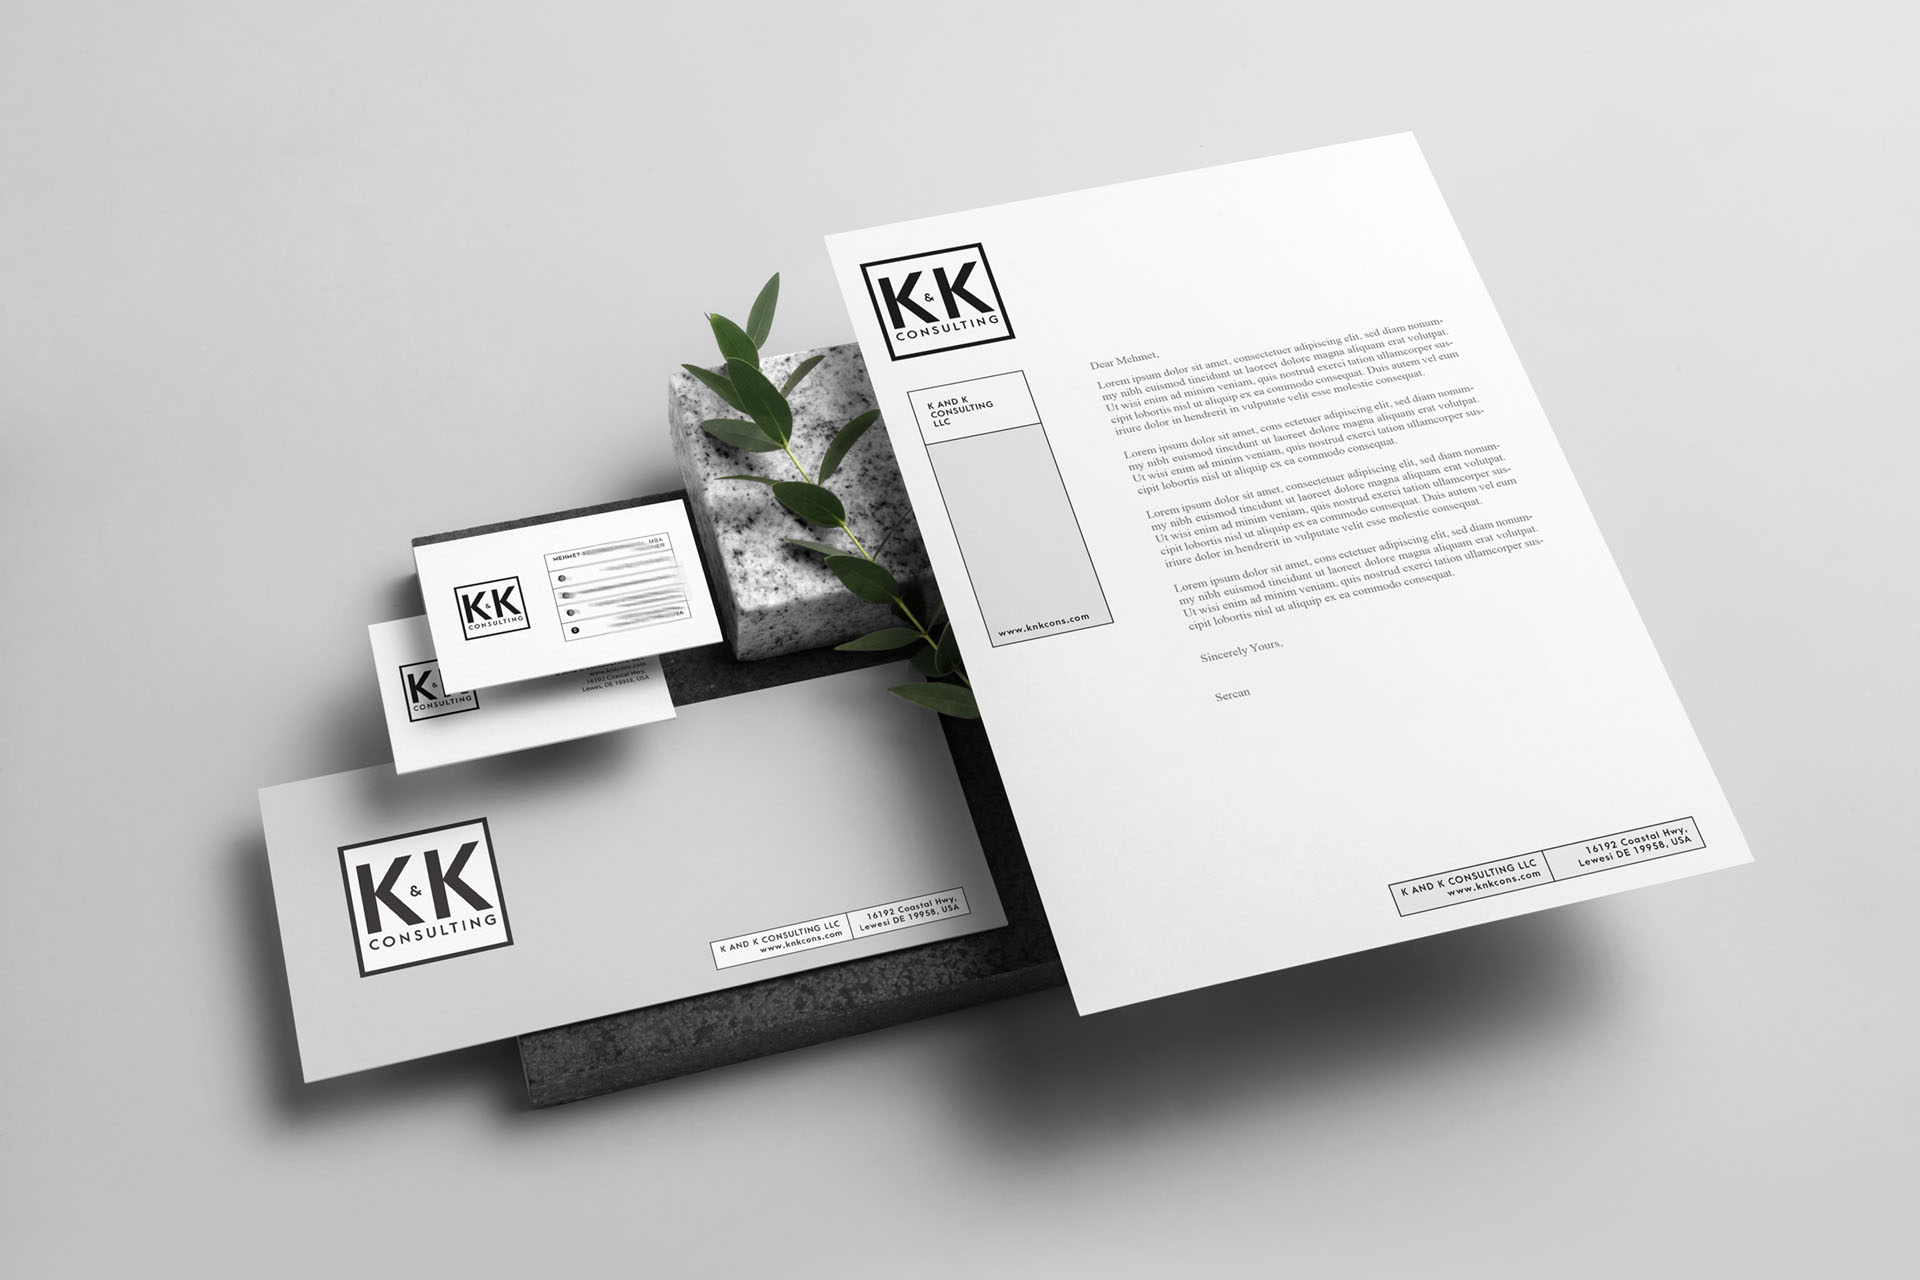 K&K-01-pure-branding-mockup-vol1